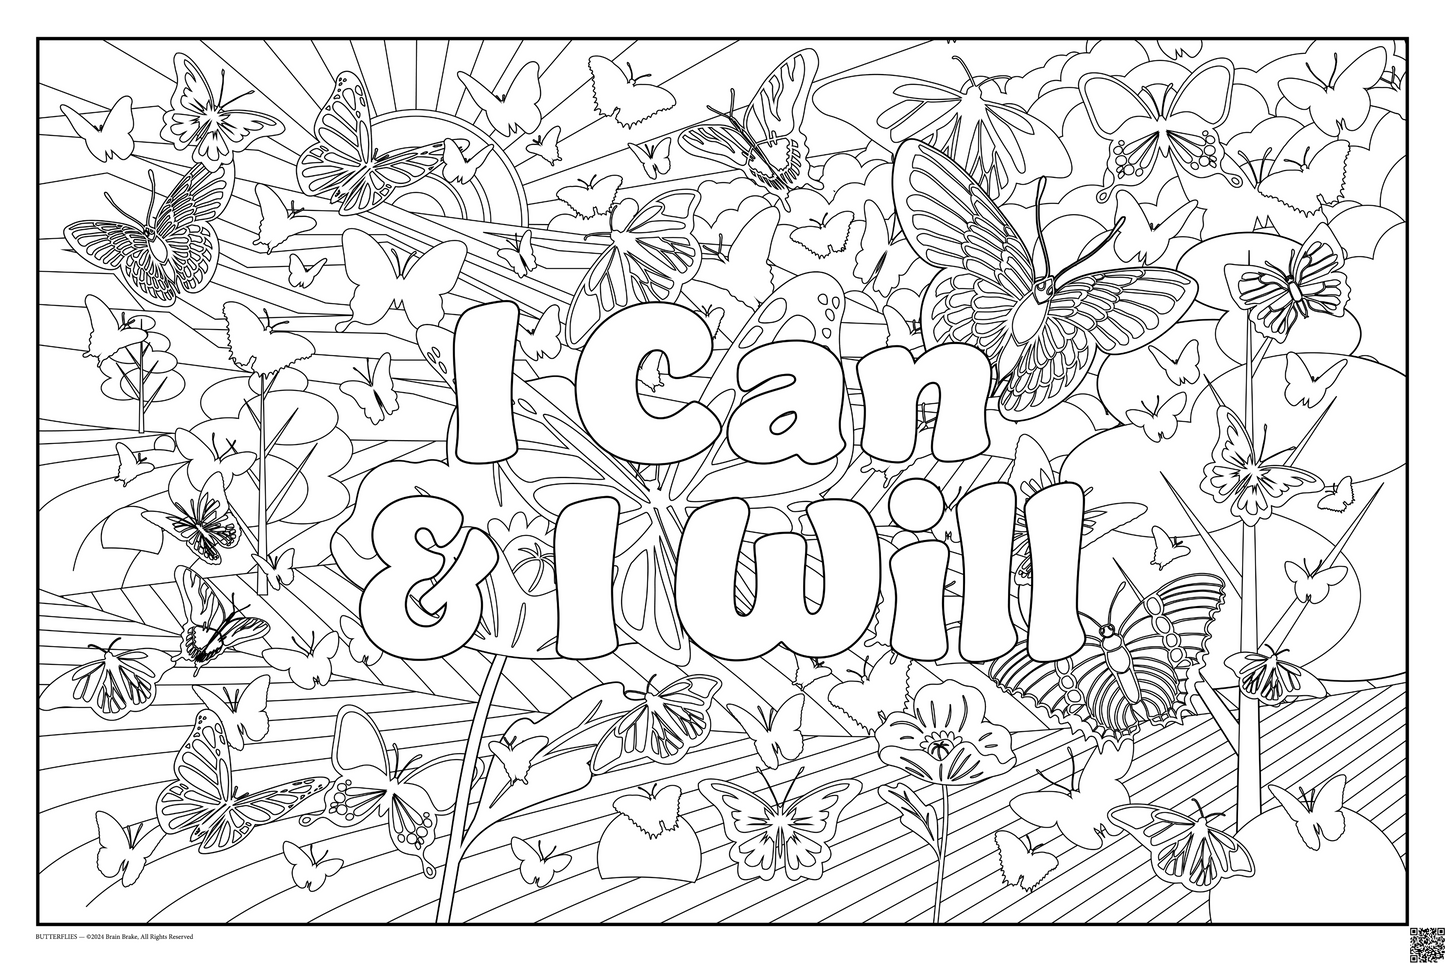 Calming Corner: I Can & I Will